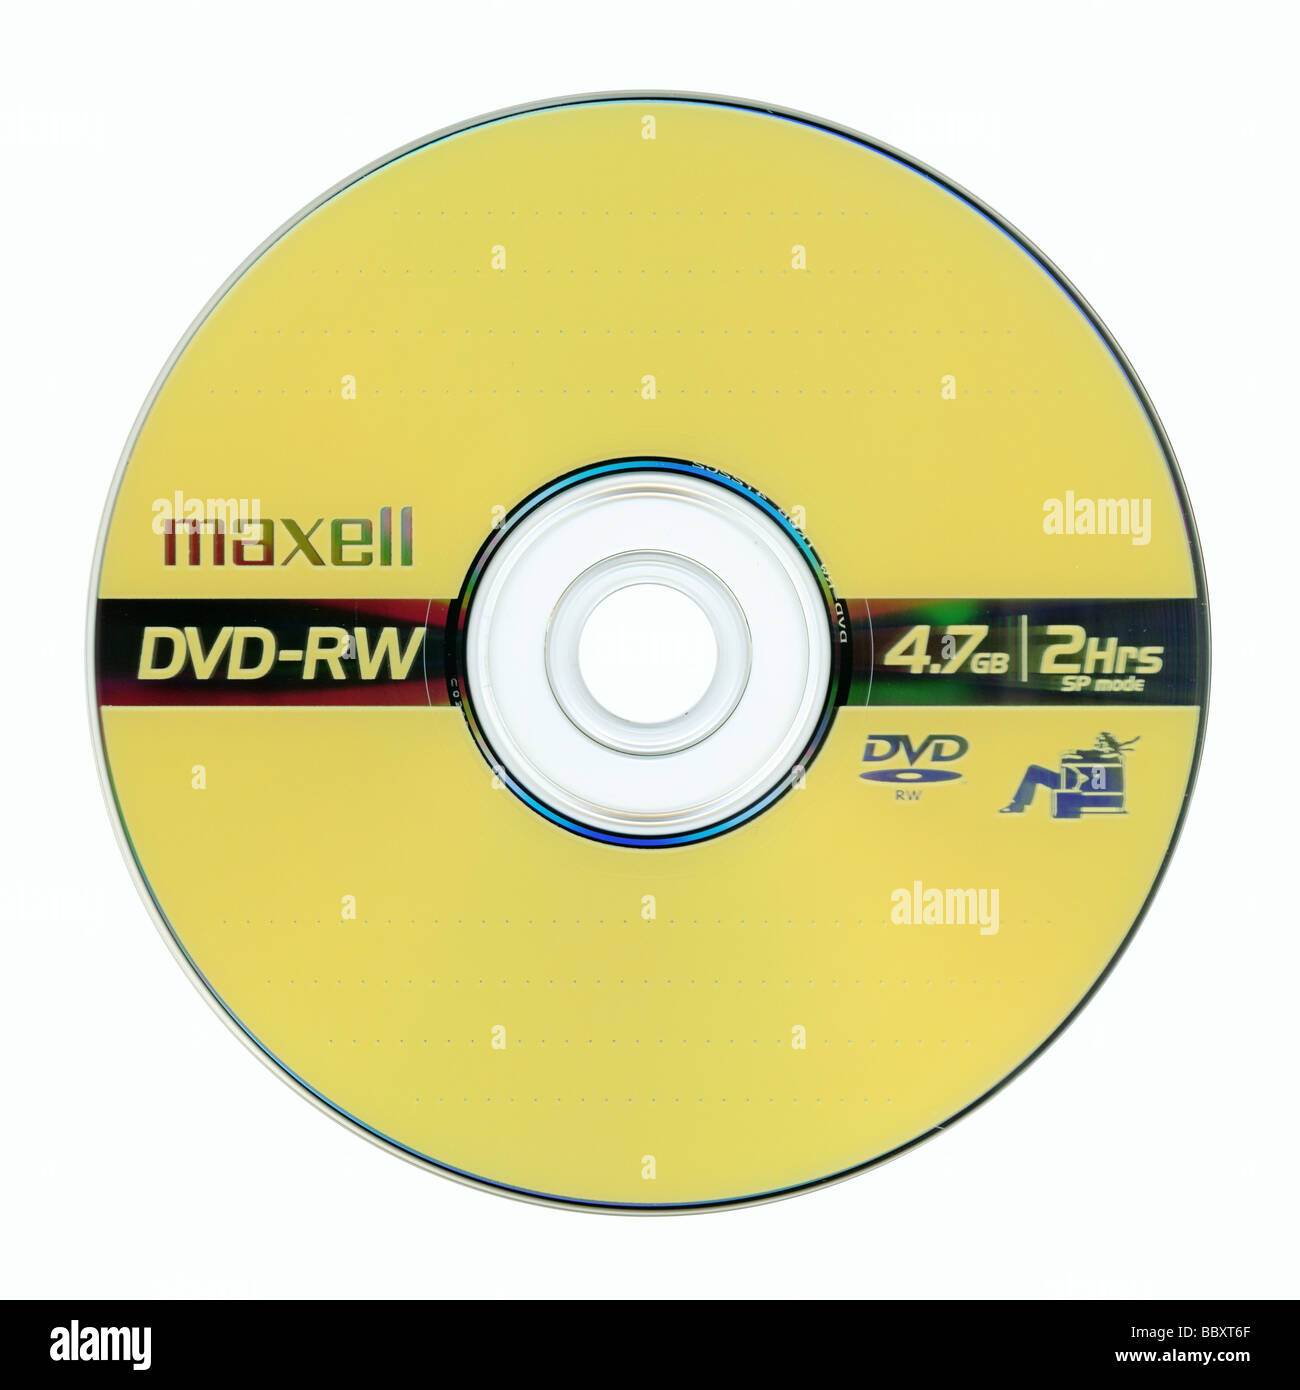 Dvd rw fotografías e imágenes de alta resolución - Alamy